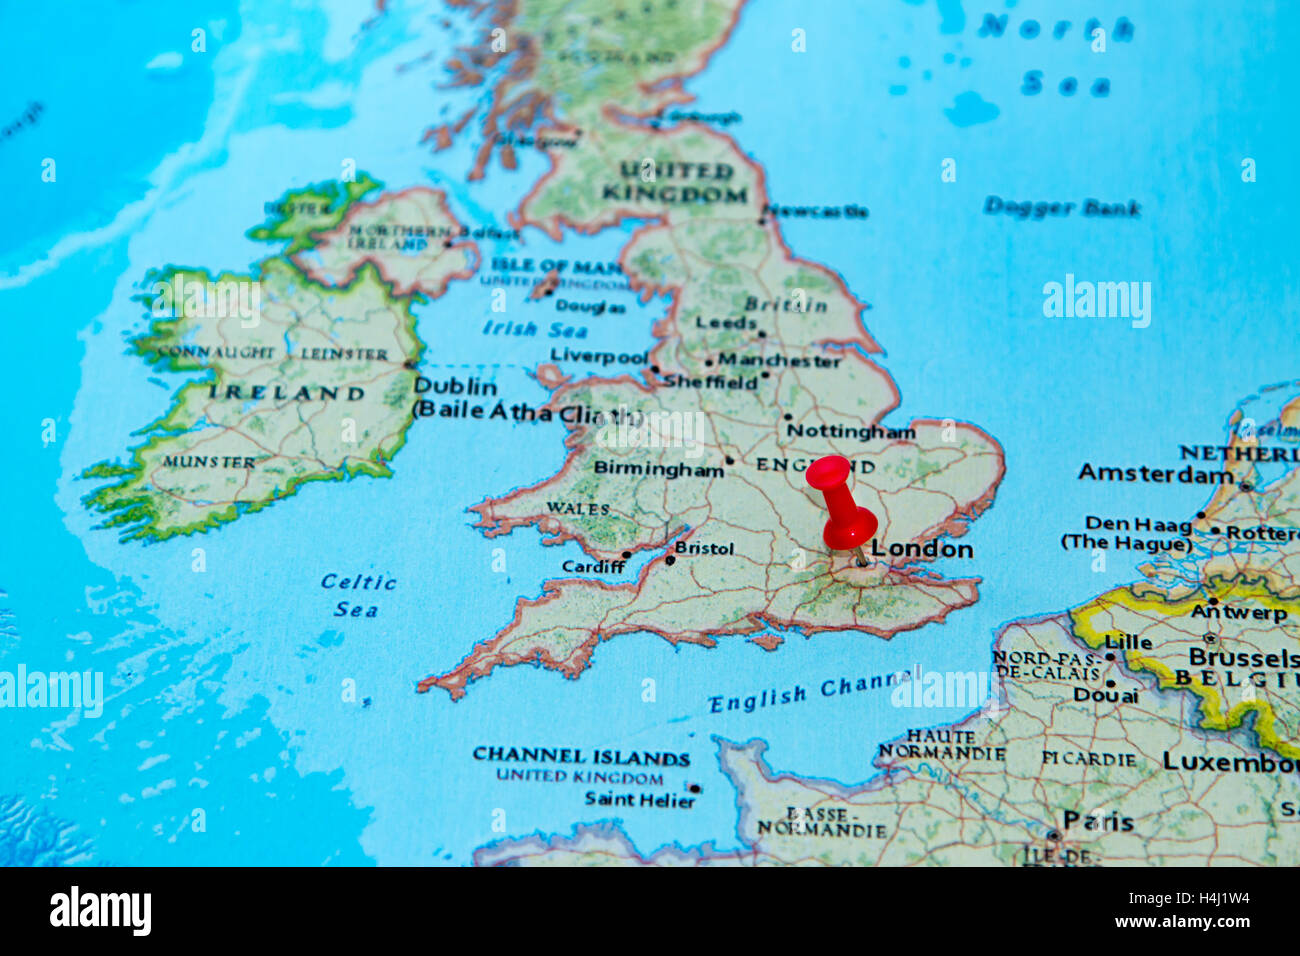 London U K Pinned On A Map Of Europe Stock Photo 123327824 Alamy